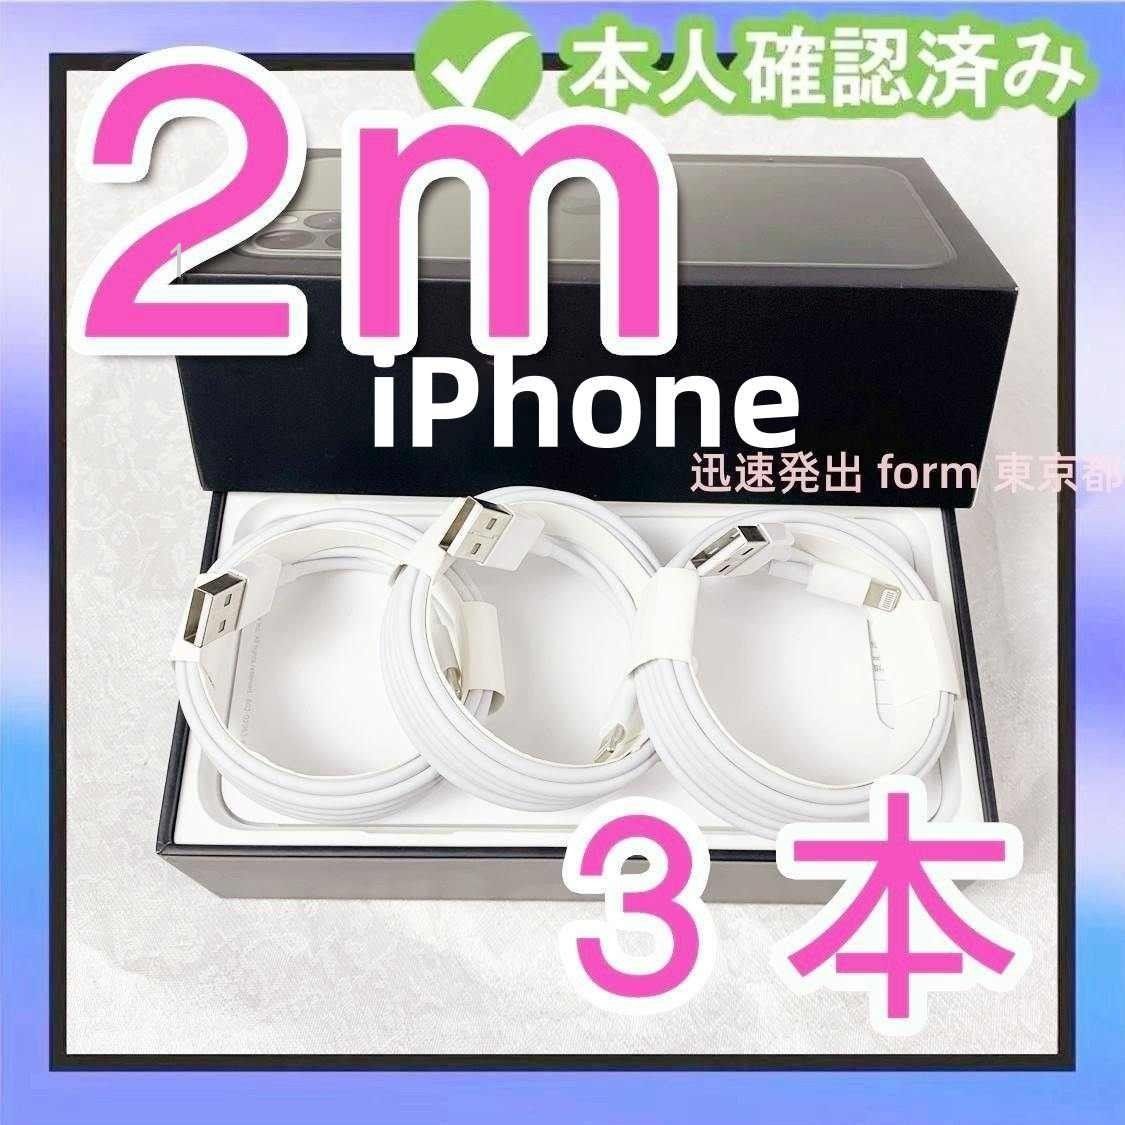 4本2m iPhone 充電器 Apple純正品質 白 品質 充電ケーブル 新品